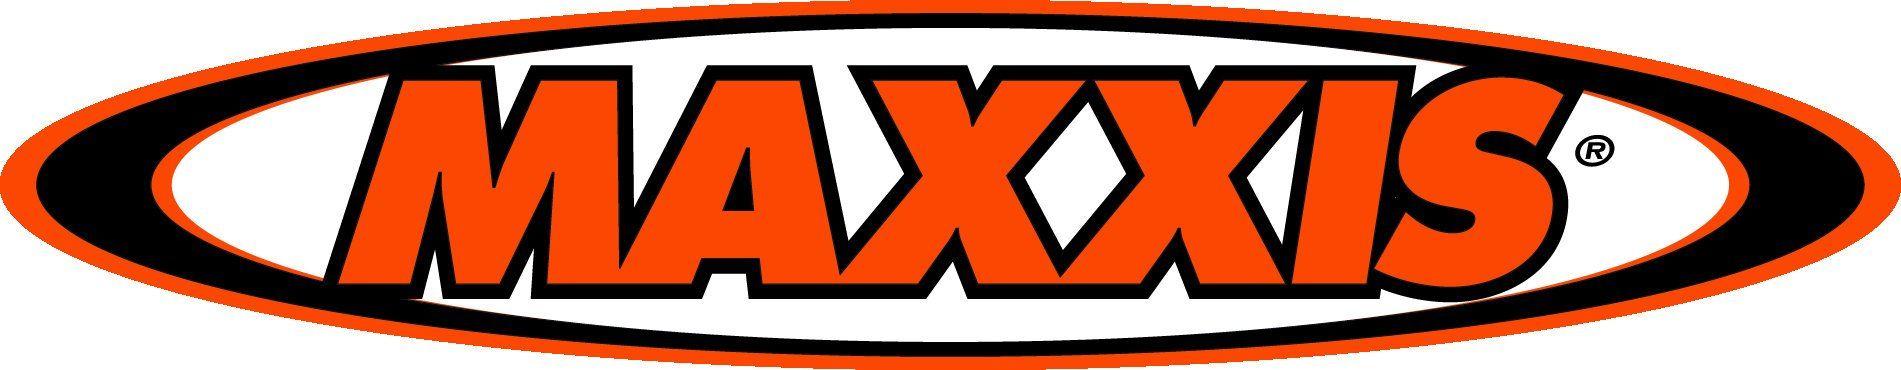 Maxxis Logo - MAXXIS Vector logo